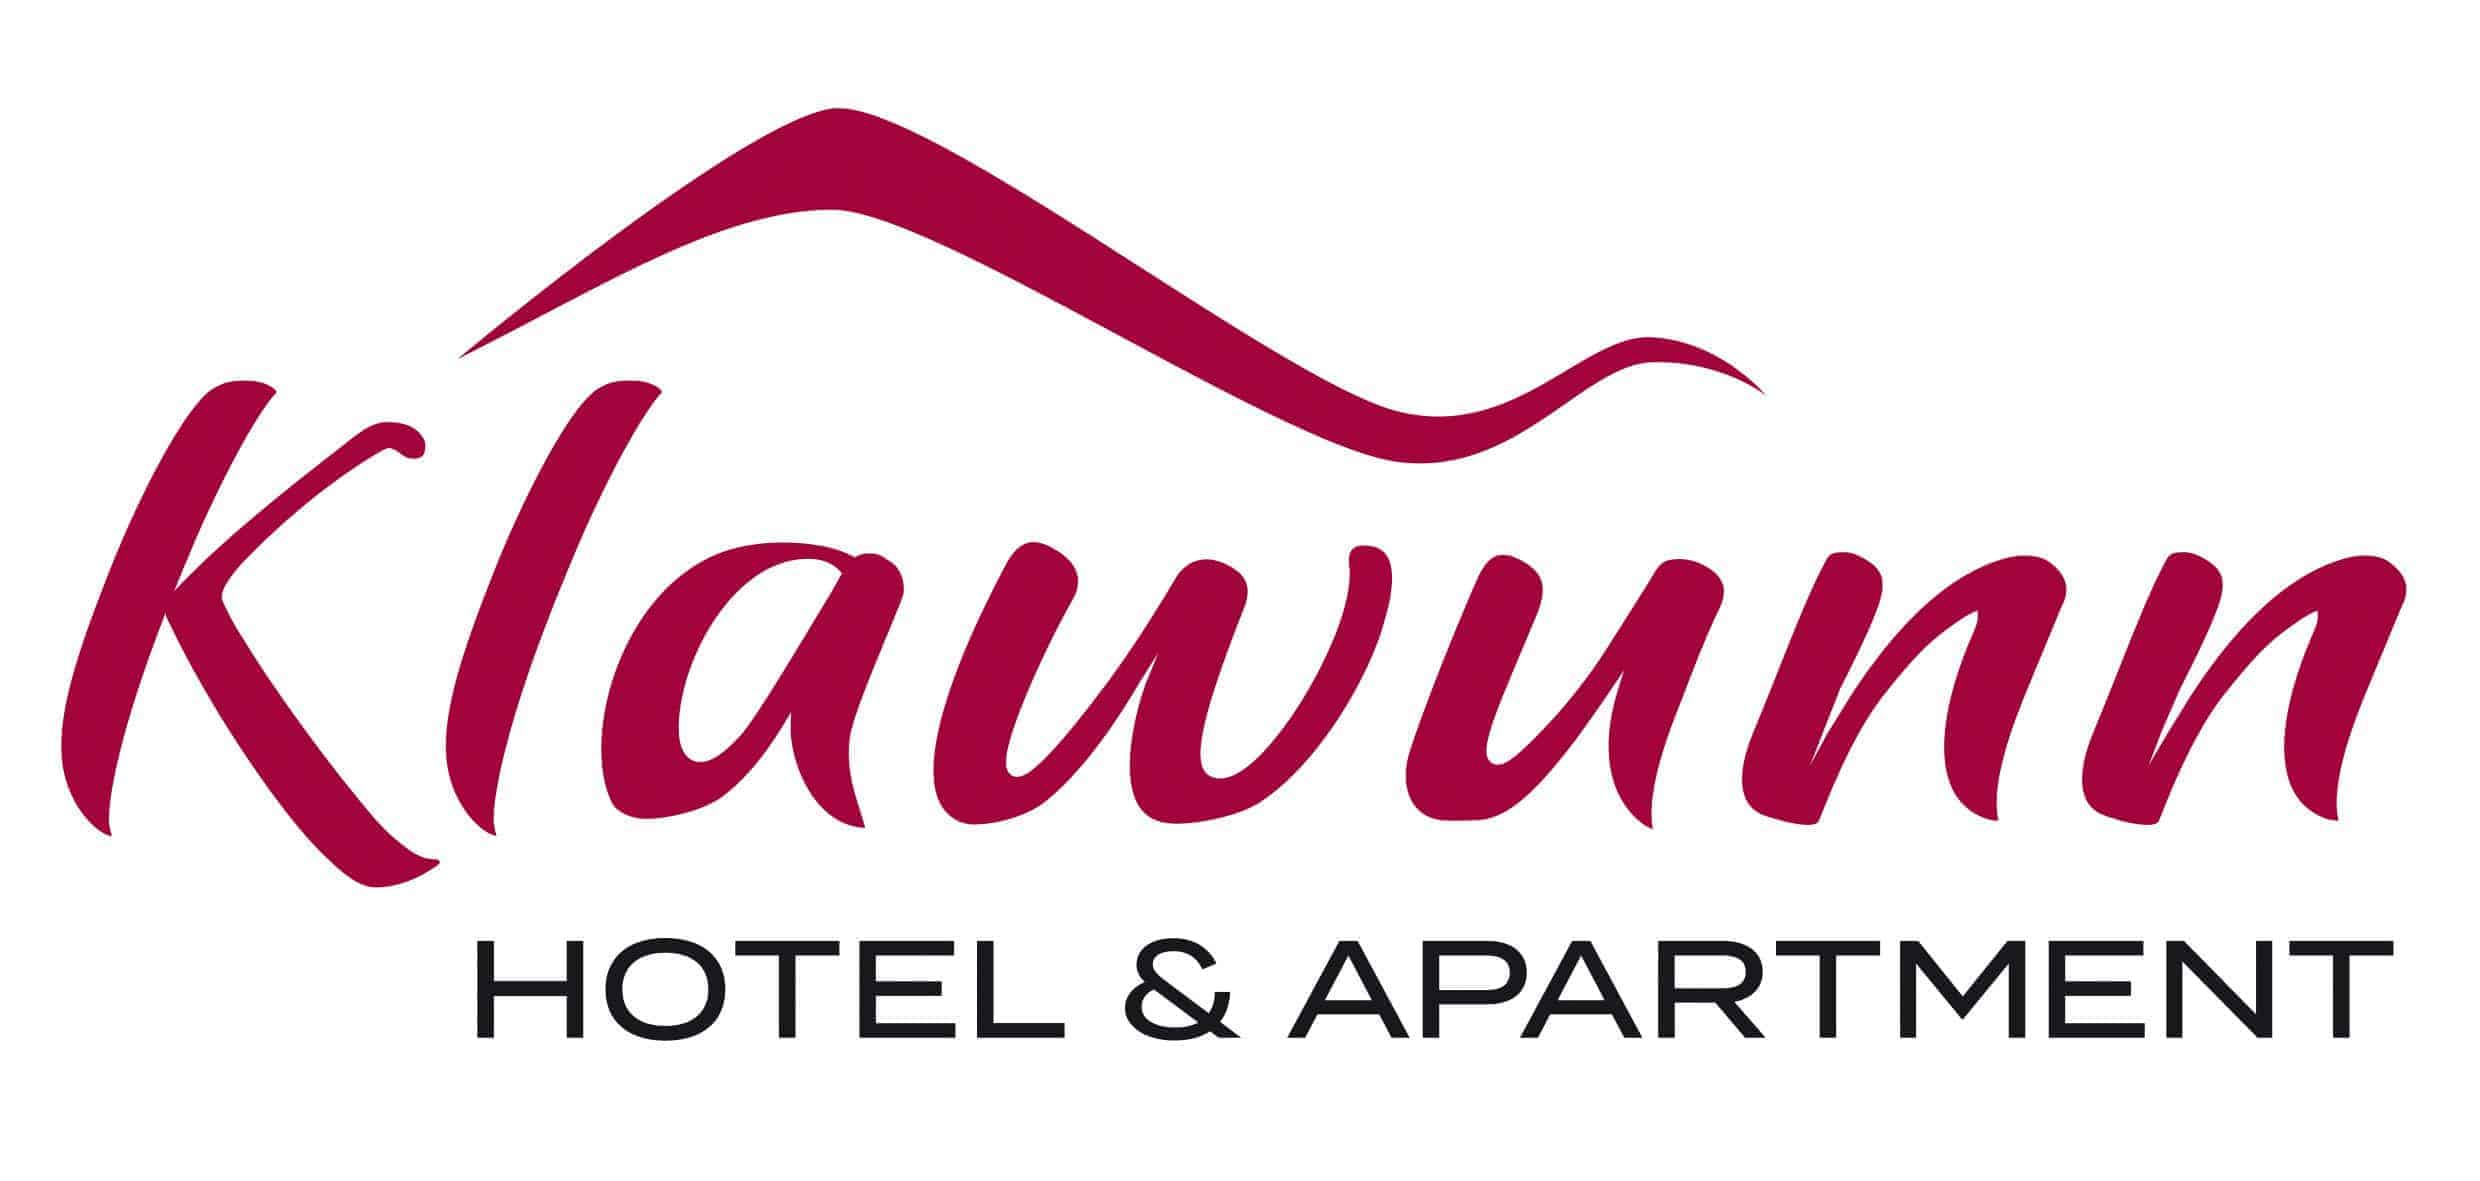 Hotel klawunn